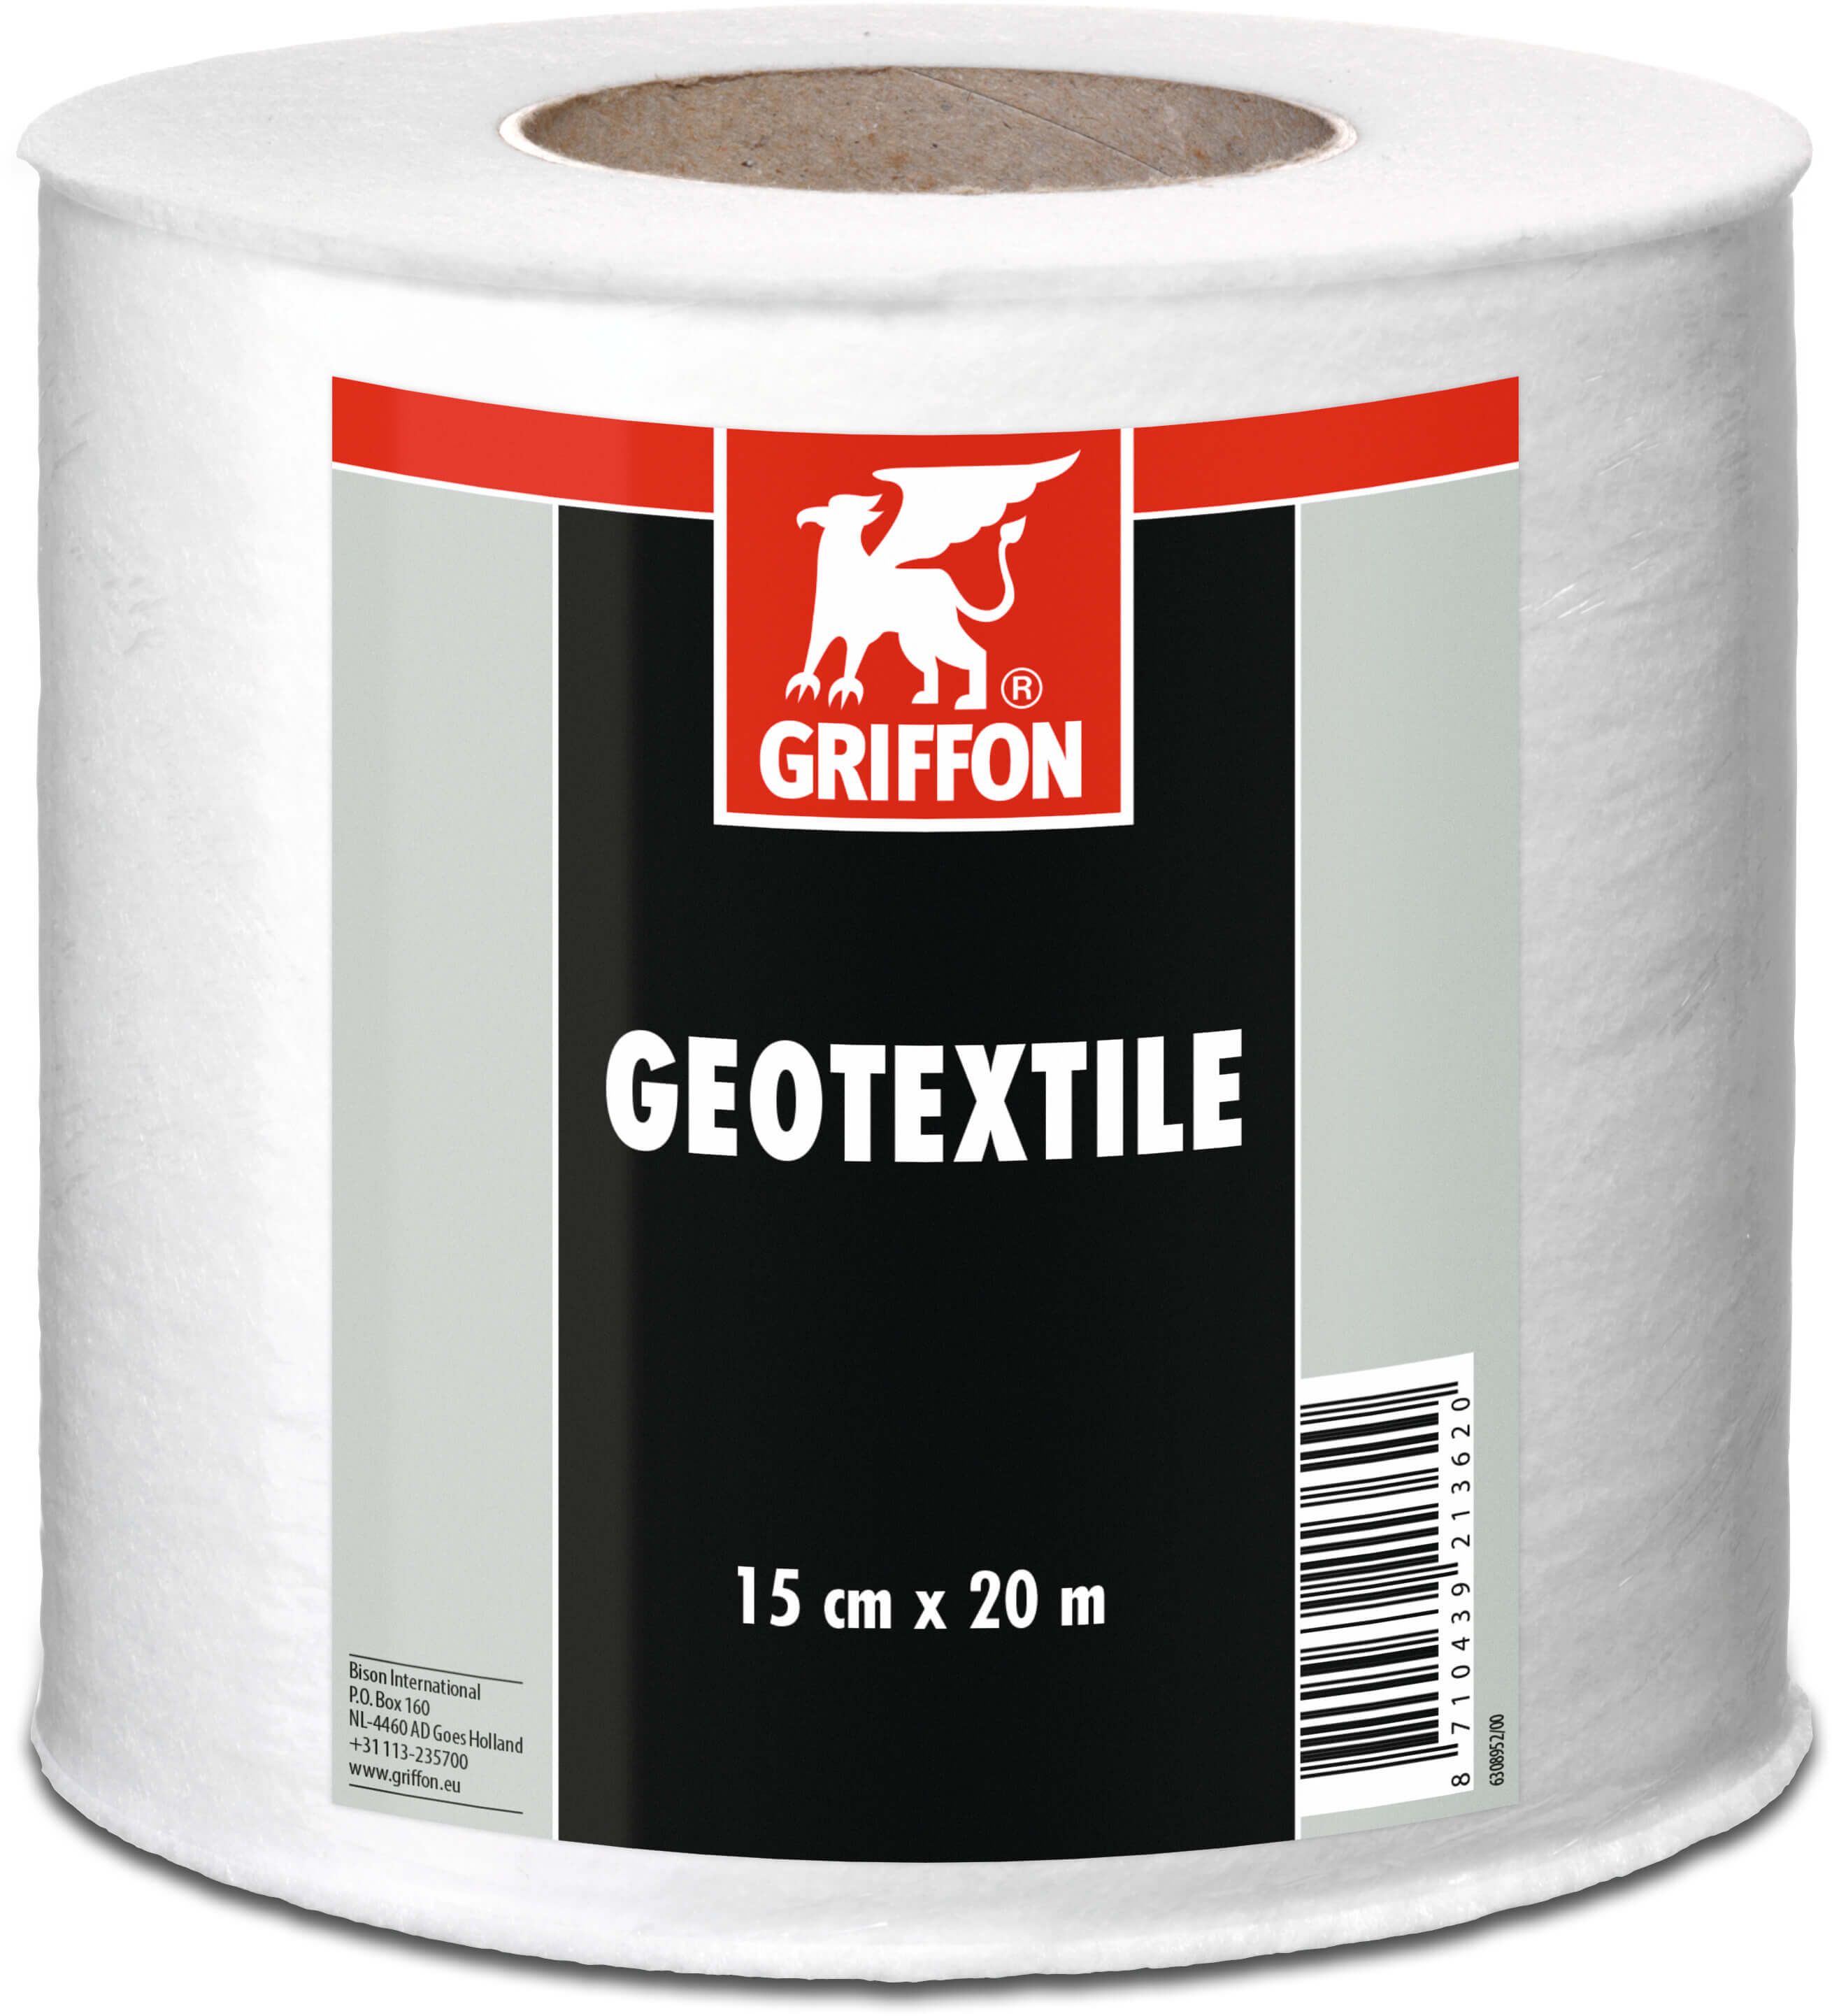 Griffon Geotextile 20m type Geotextile 150 mm